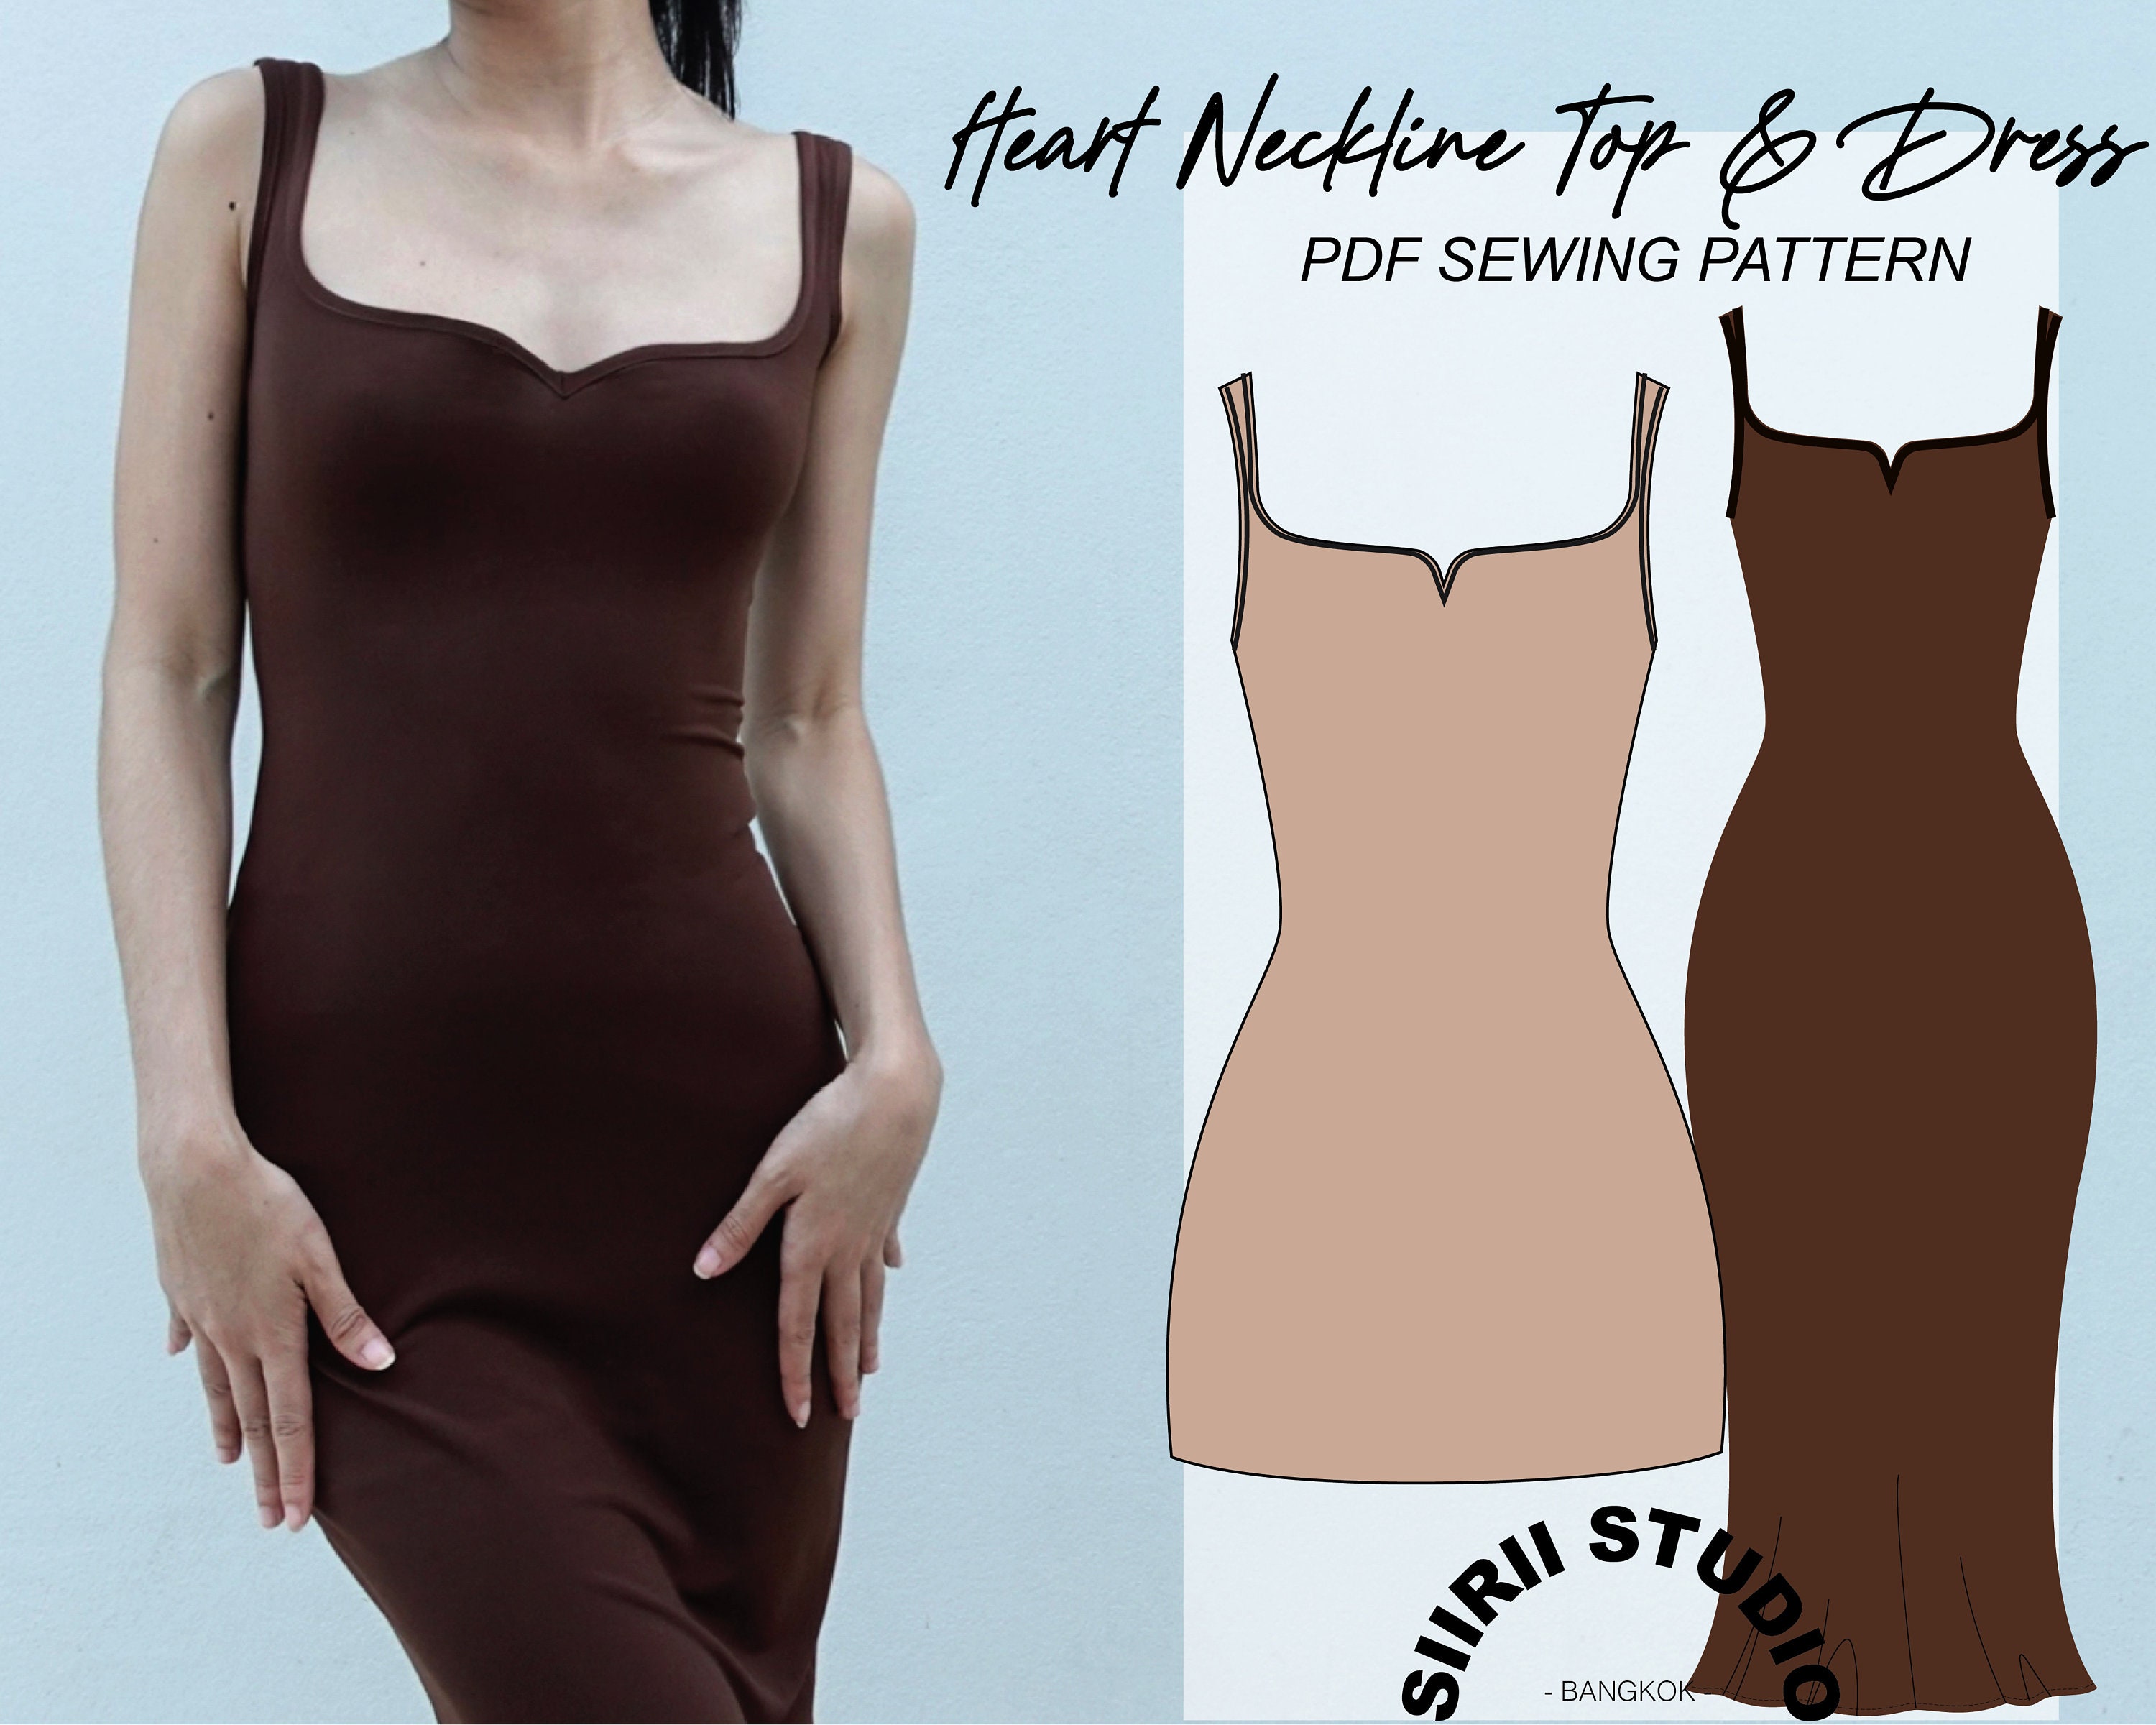 Heart Neckline Top & Dress Sewing Pattern PDF Instant Download